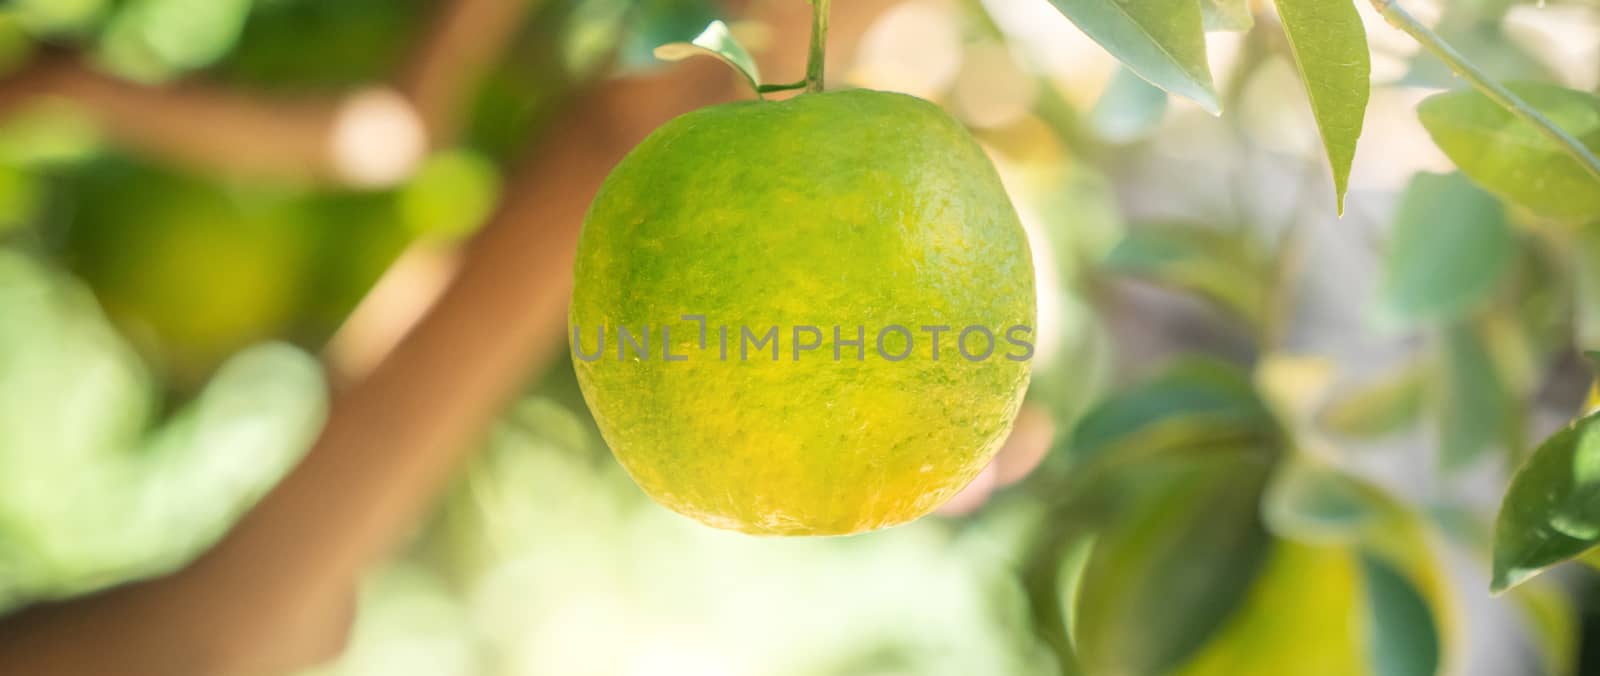 Fresh ripe tangerine mandarin orange on the tree in the orange g by ROMIXIMAGE